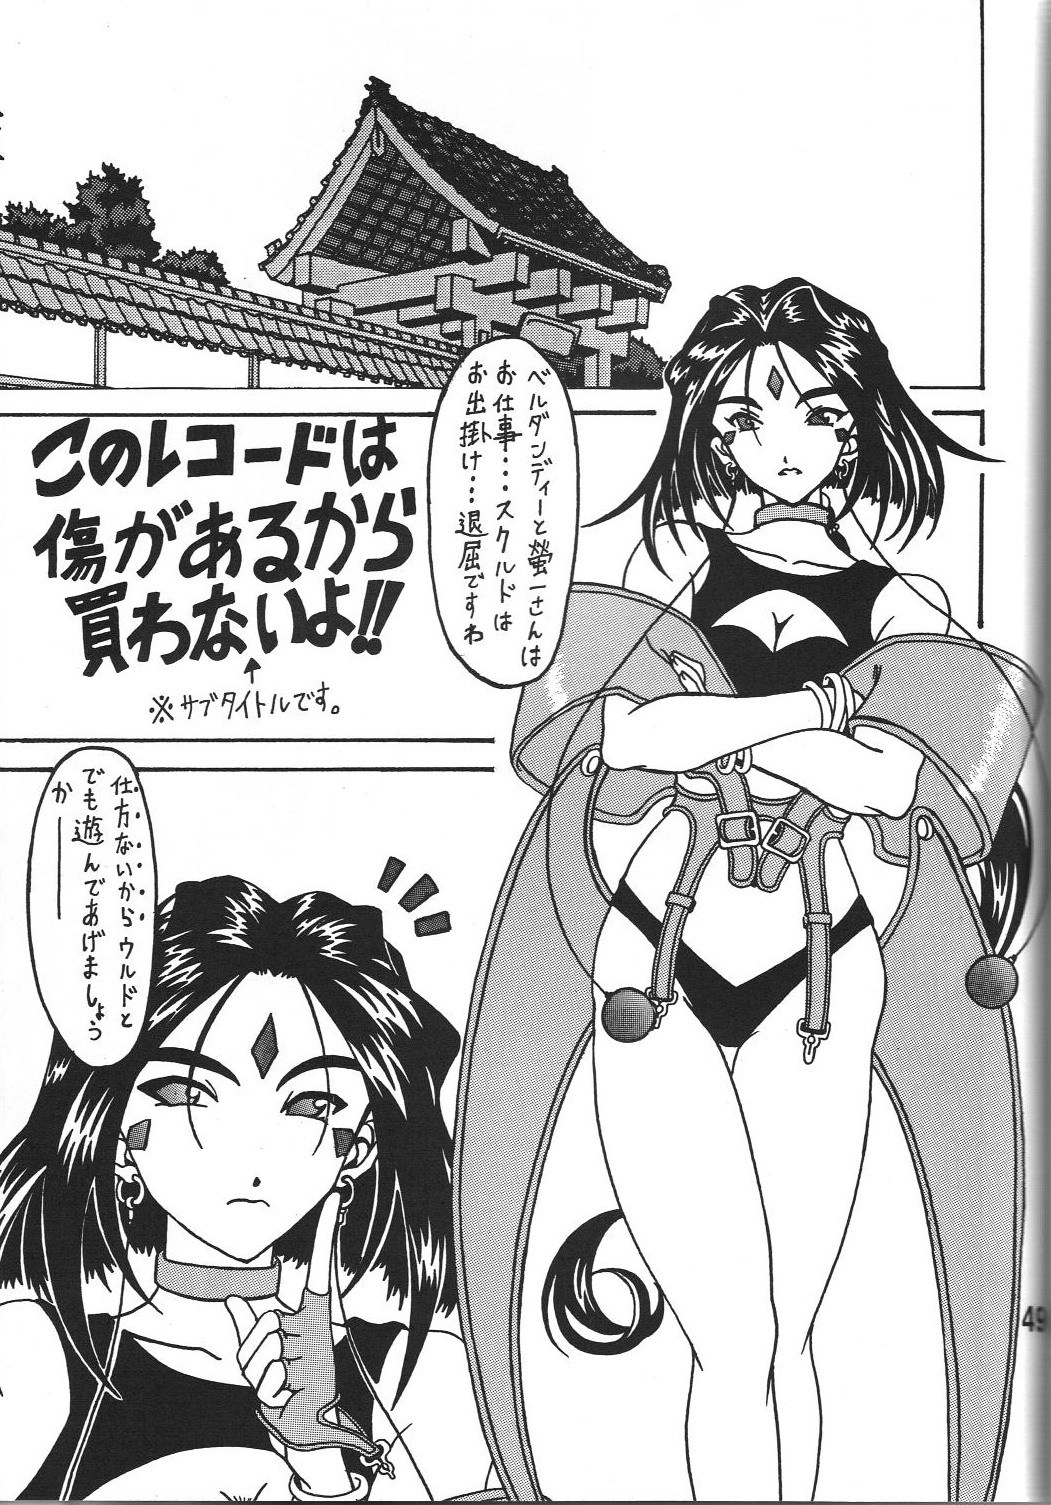 Megami no Yuri Kago by RPG COMPANY 2 An Ah! My Goddess yuri douijn. Part 1 contains